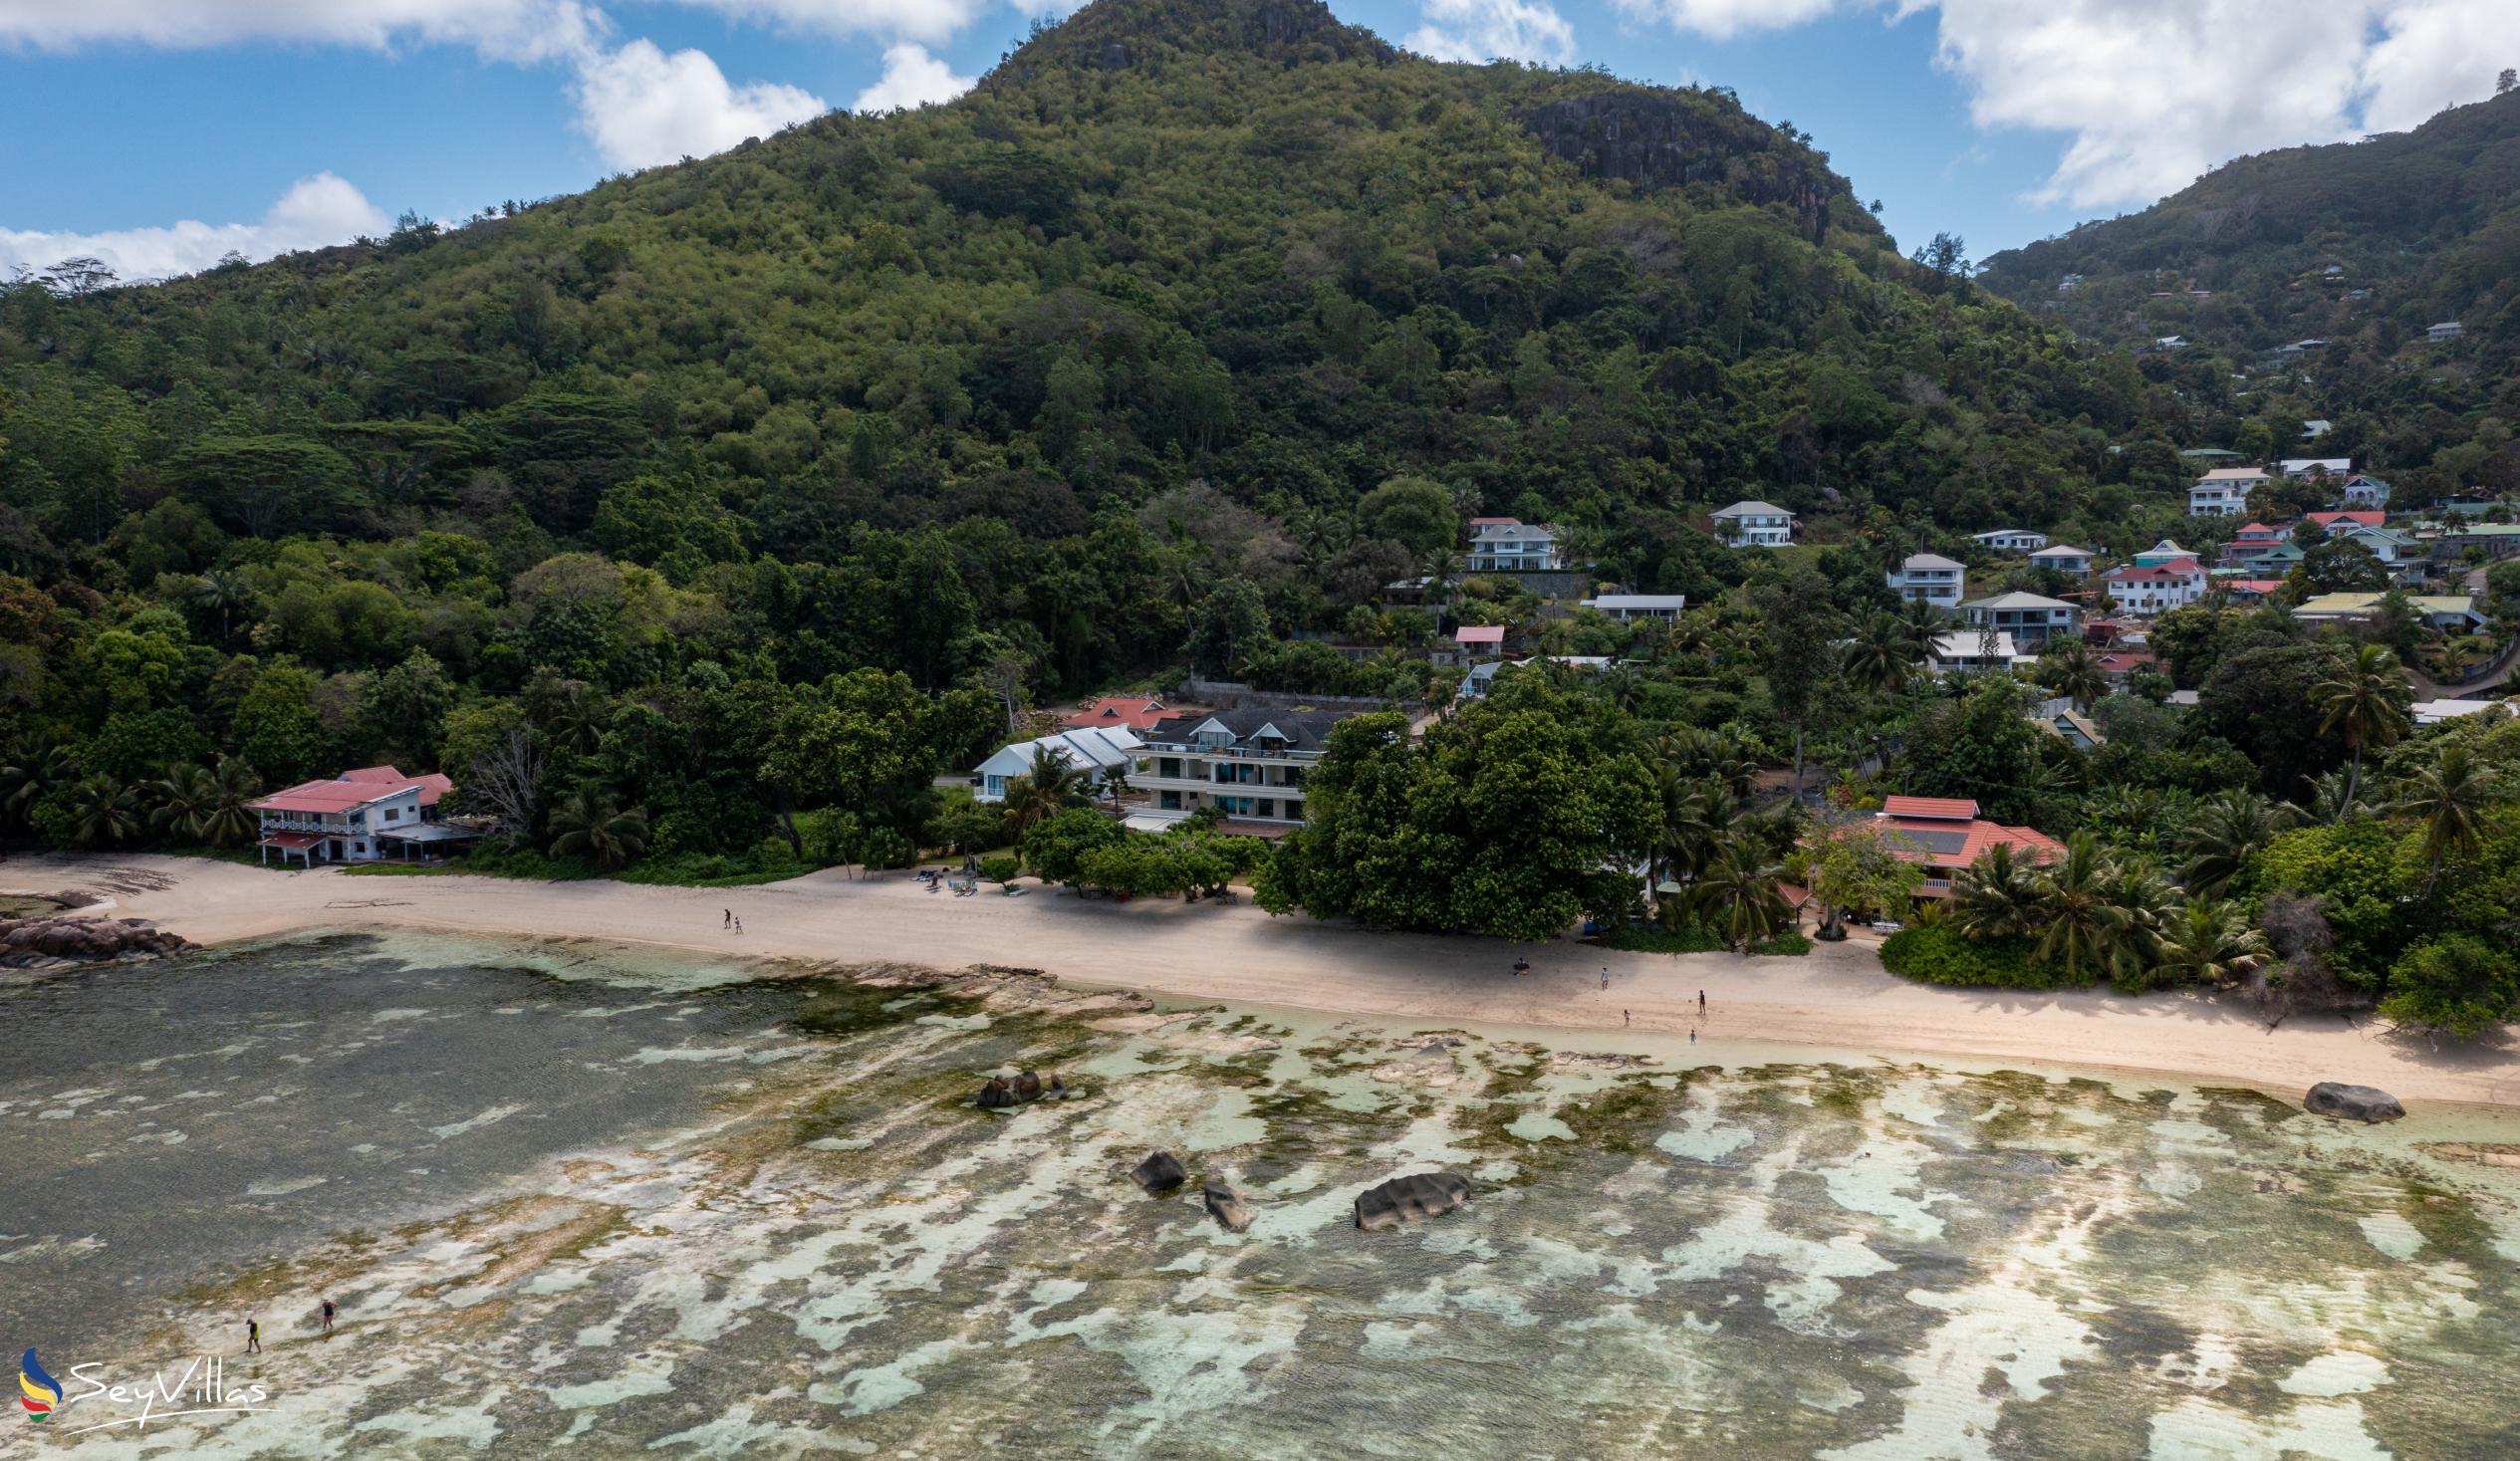 Foto 41: Villa Kordia - Lage - Mahé (Seychellen)